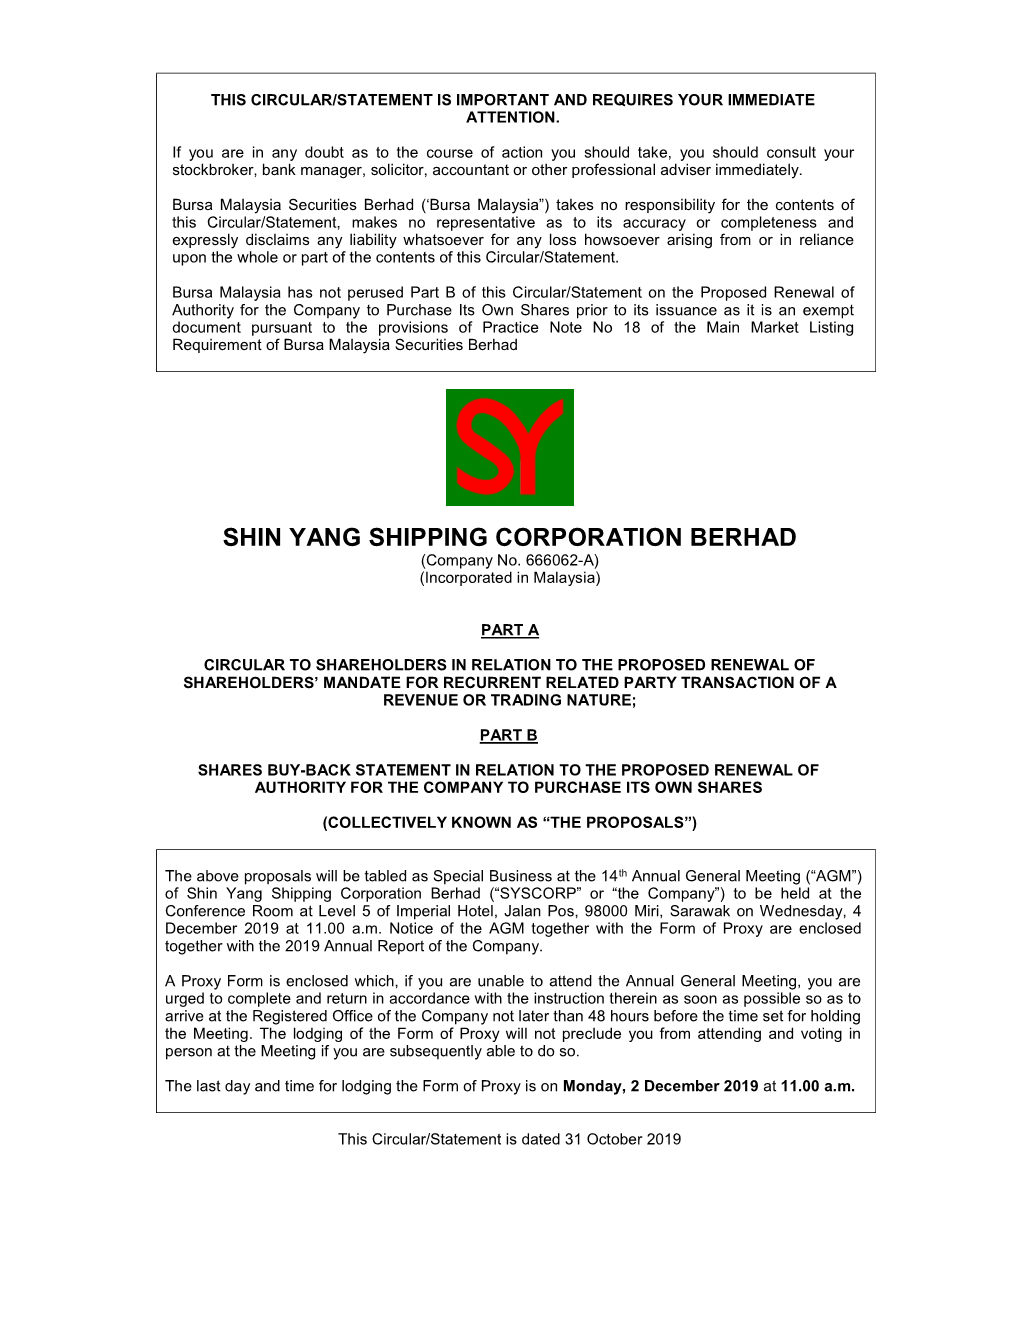 SHIN YANG SHIPPING CORPORATION BERHAD (Company No